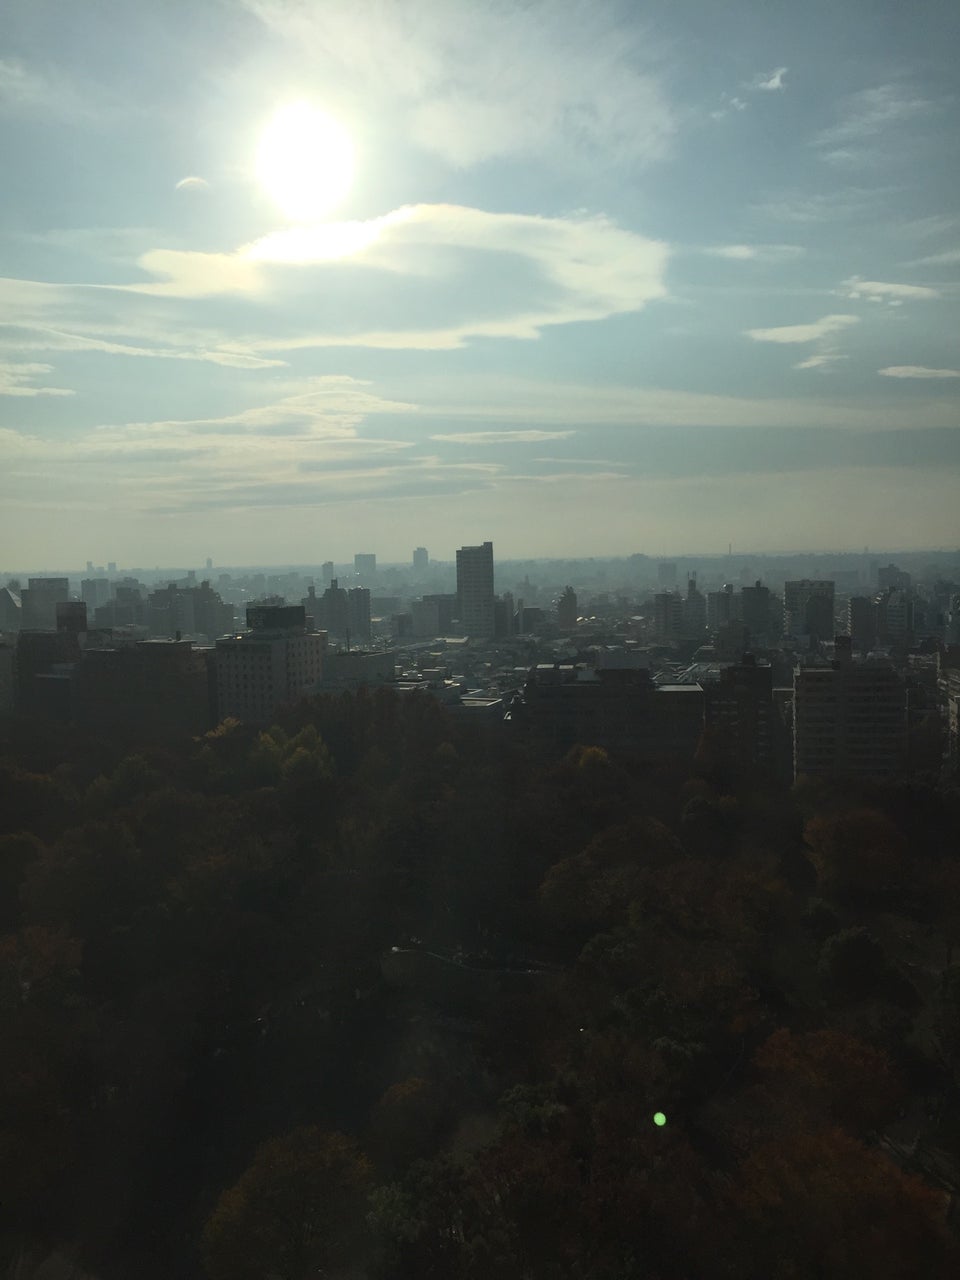 Photo of Hyatt Regency Tokyo